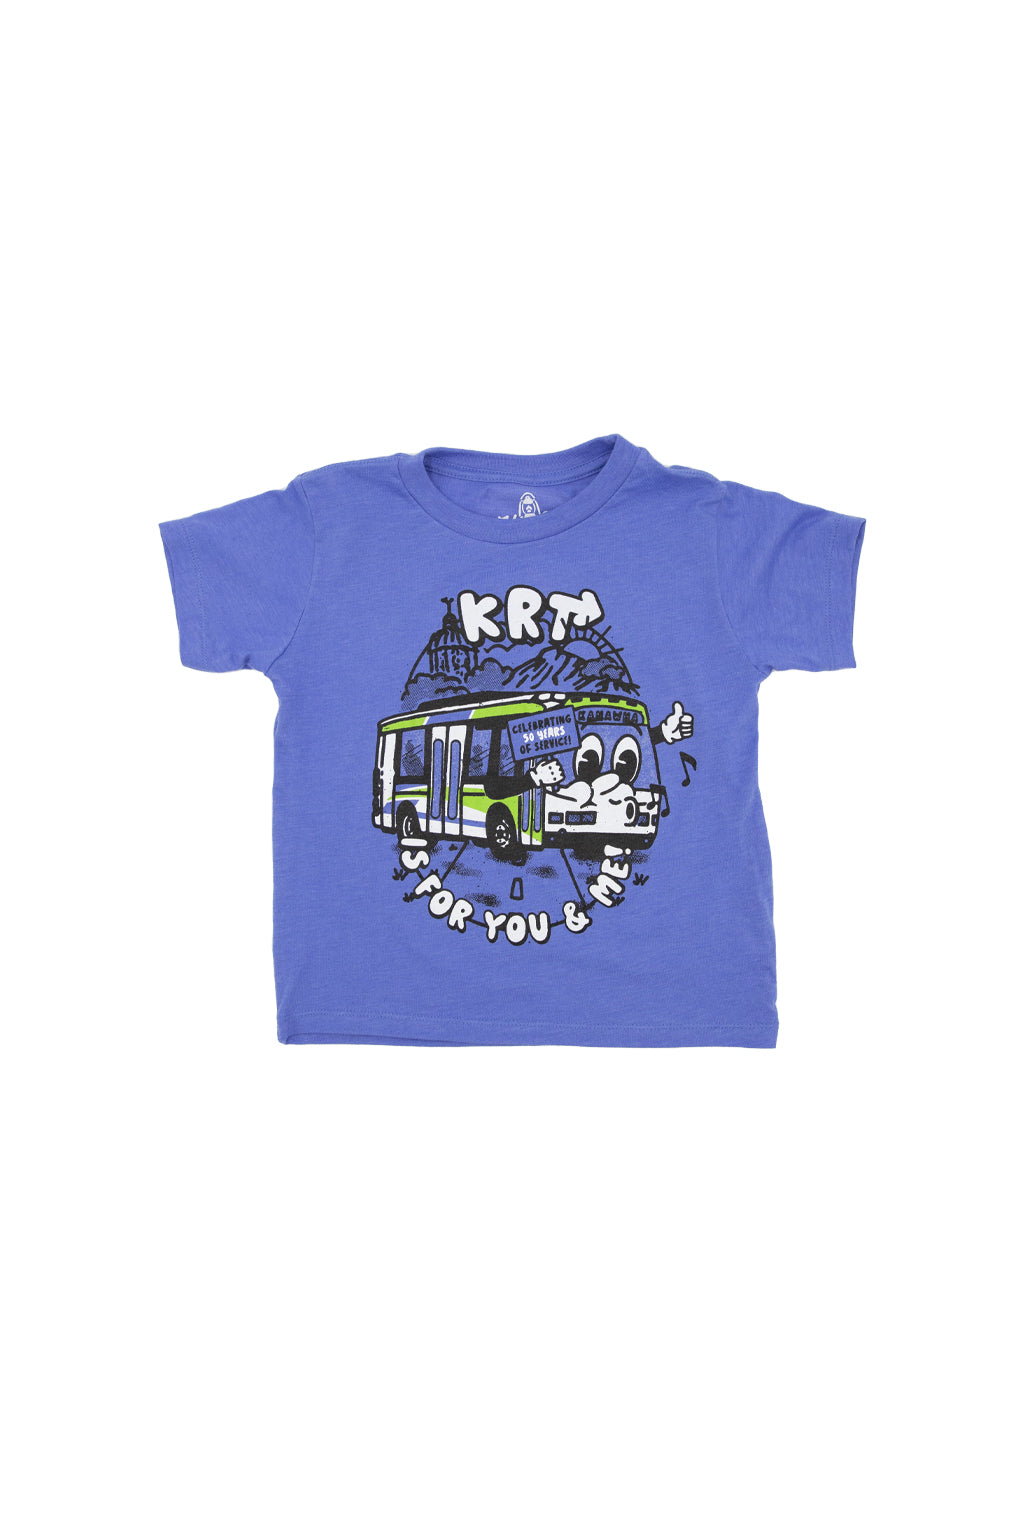 Limited Edition: KRT kids tee, final sale